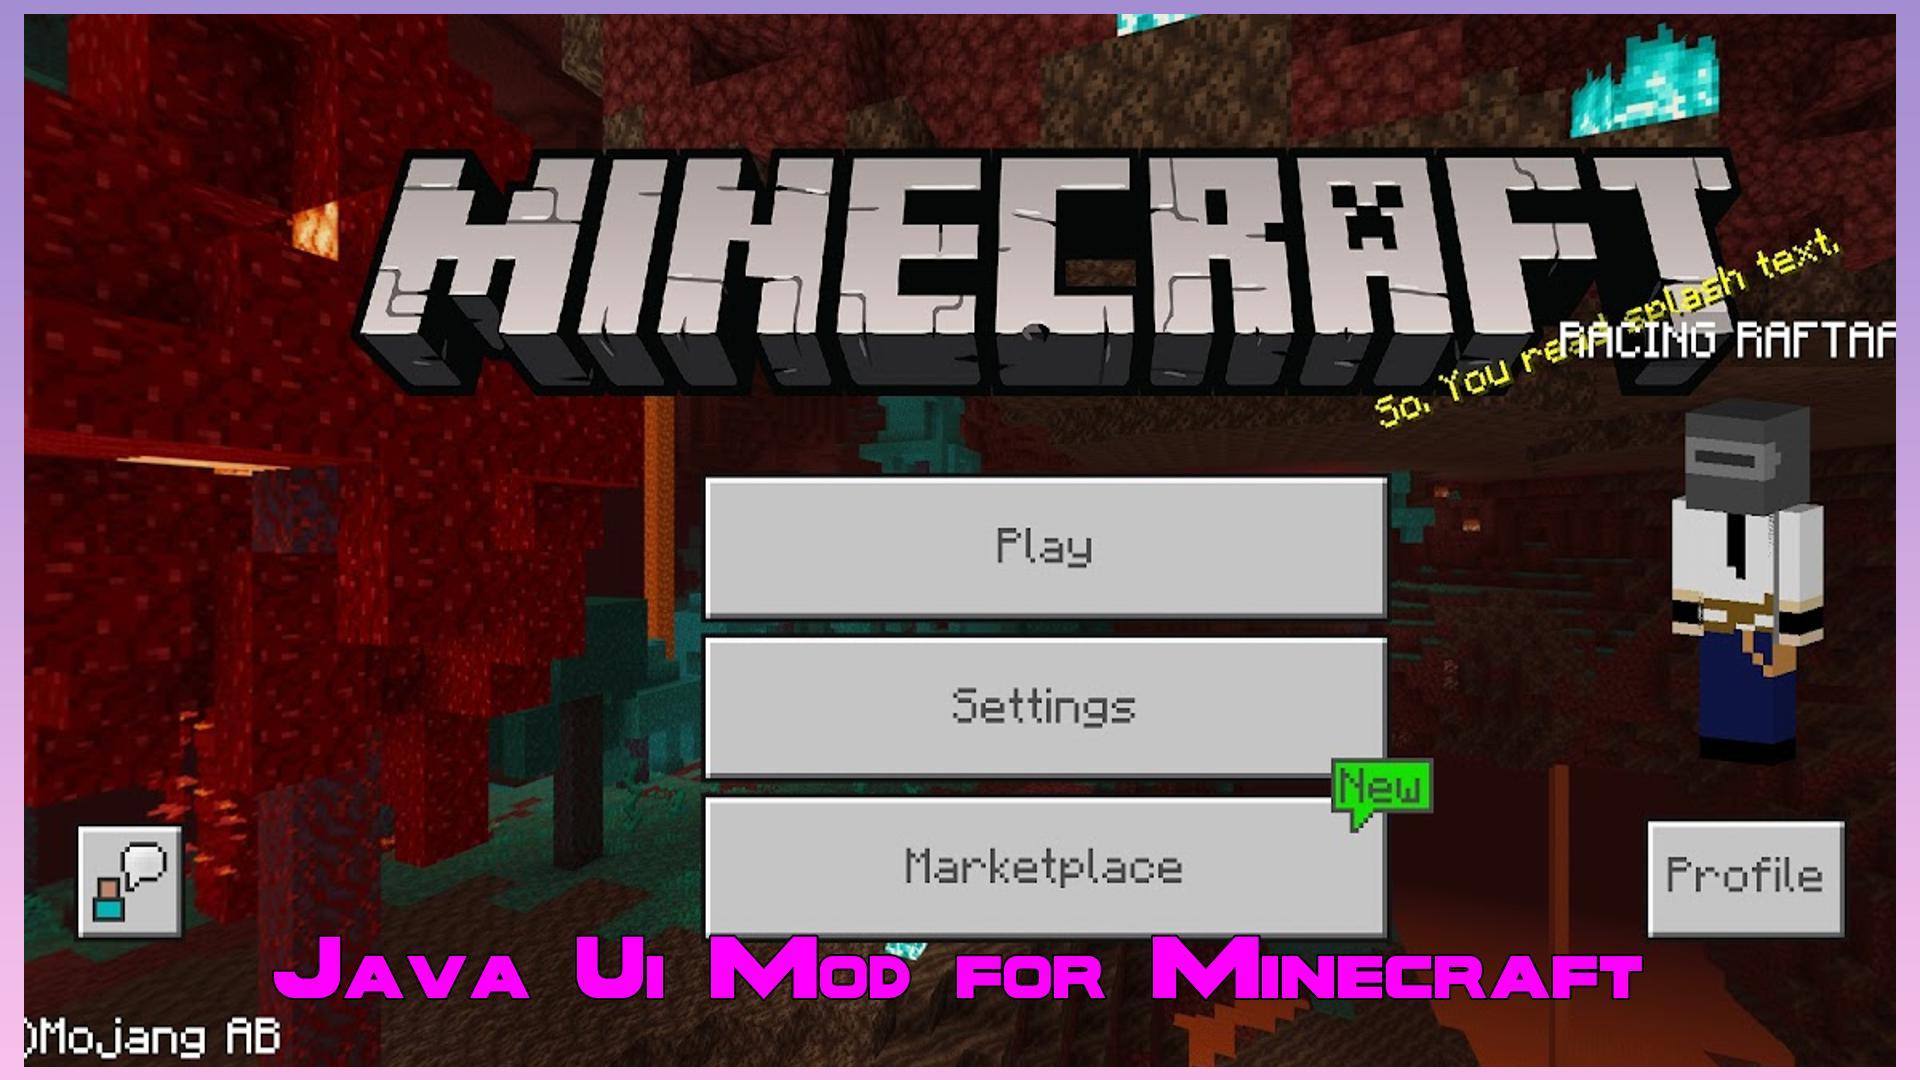 Download Java Edition Mod for Minecraft App Free on PC (Emulator) - LDPlayer